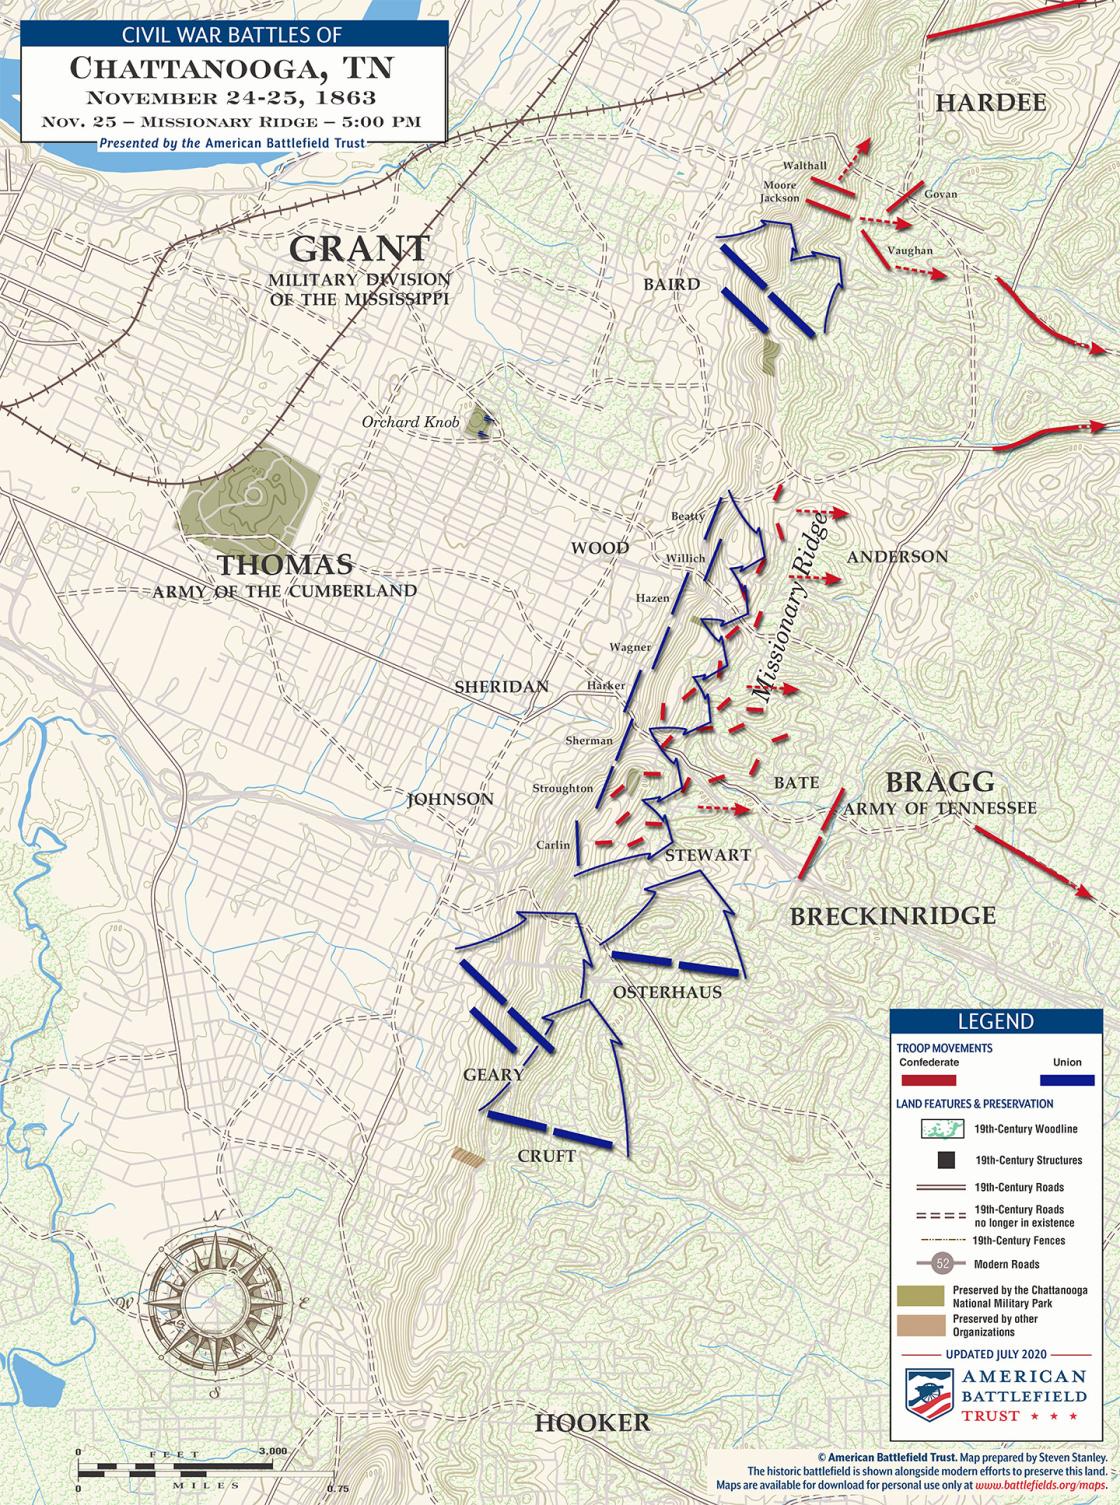 Chattanooga Missionary Ridge November 25 1863 5pm American